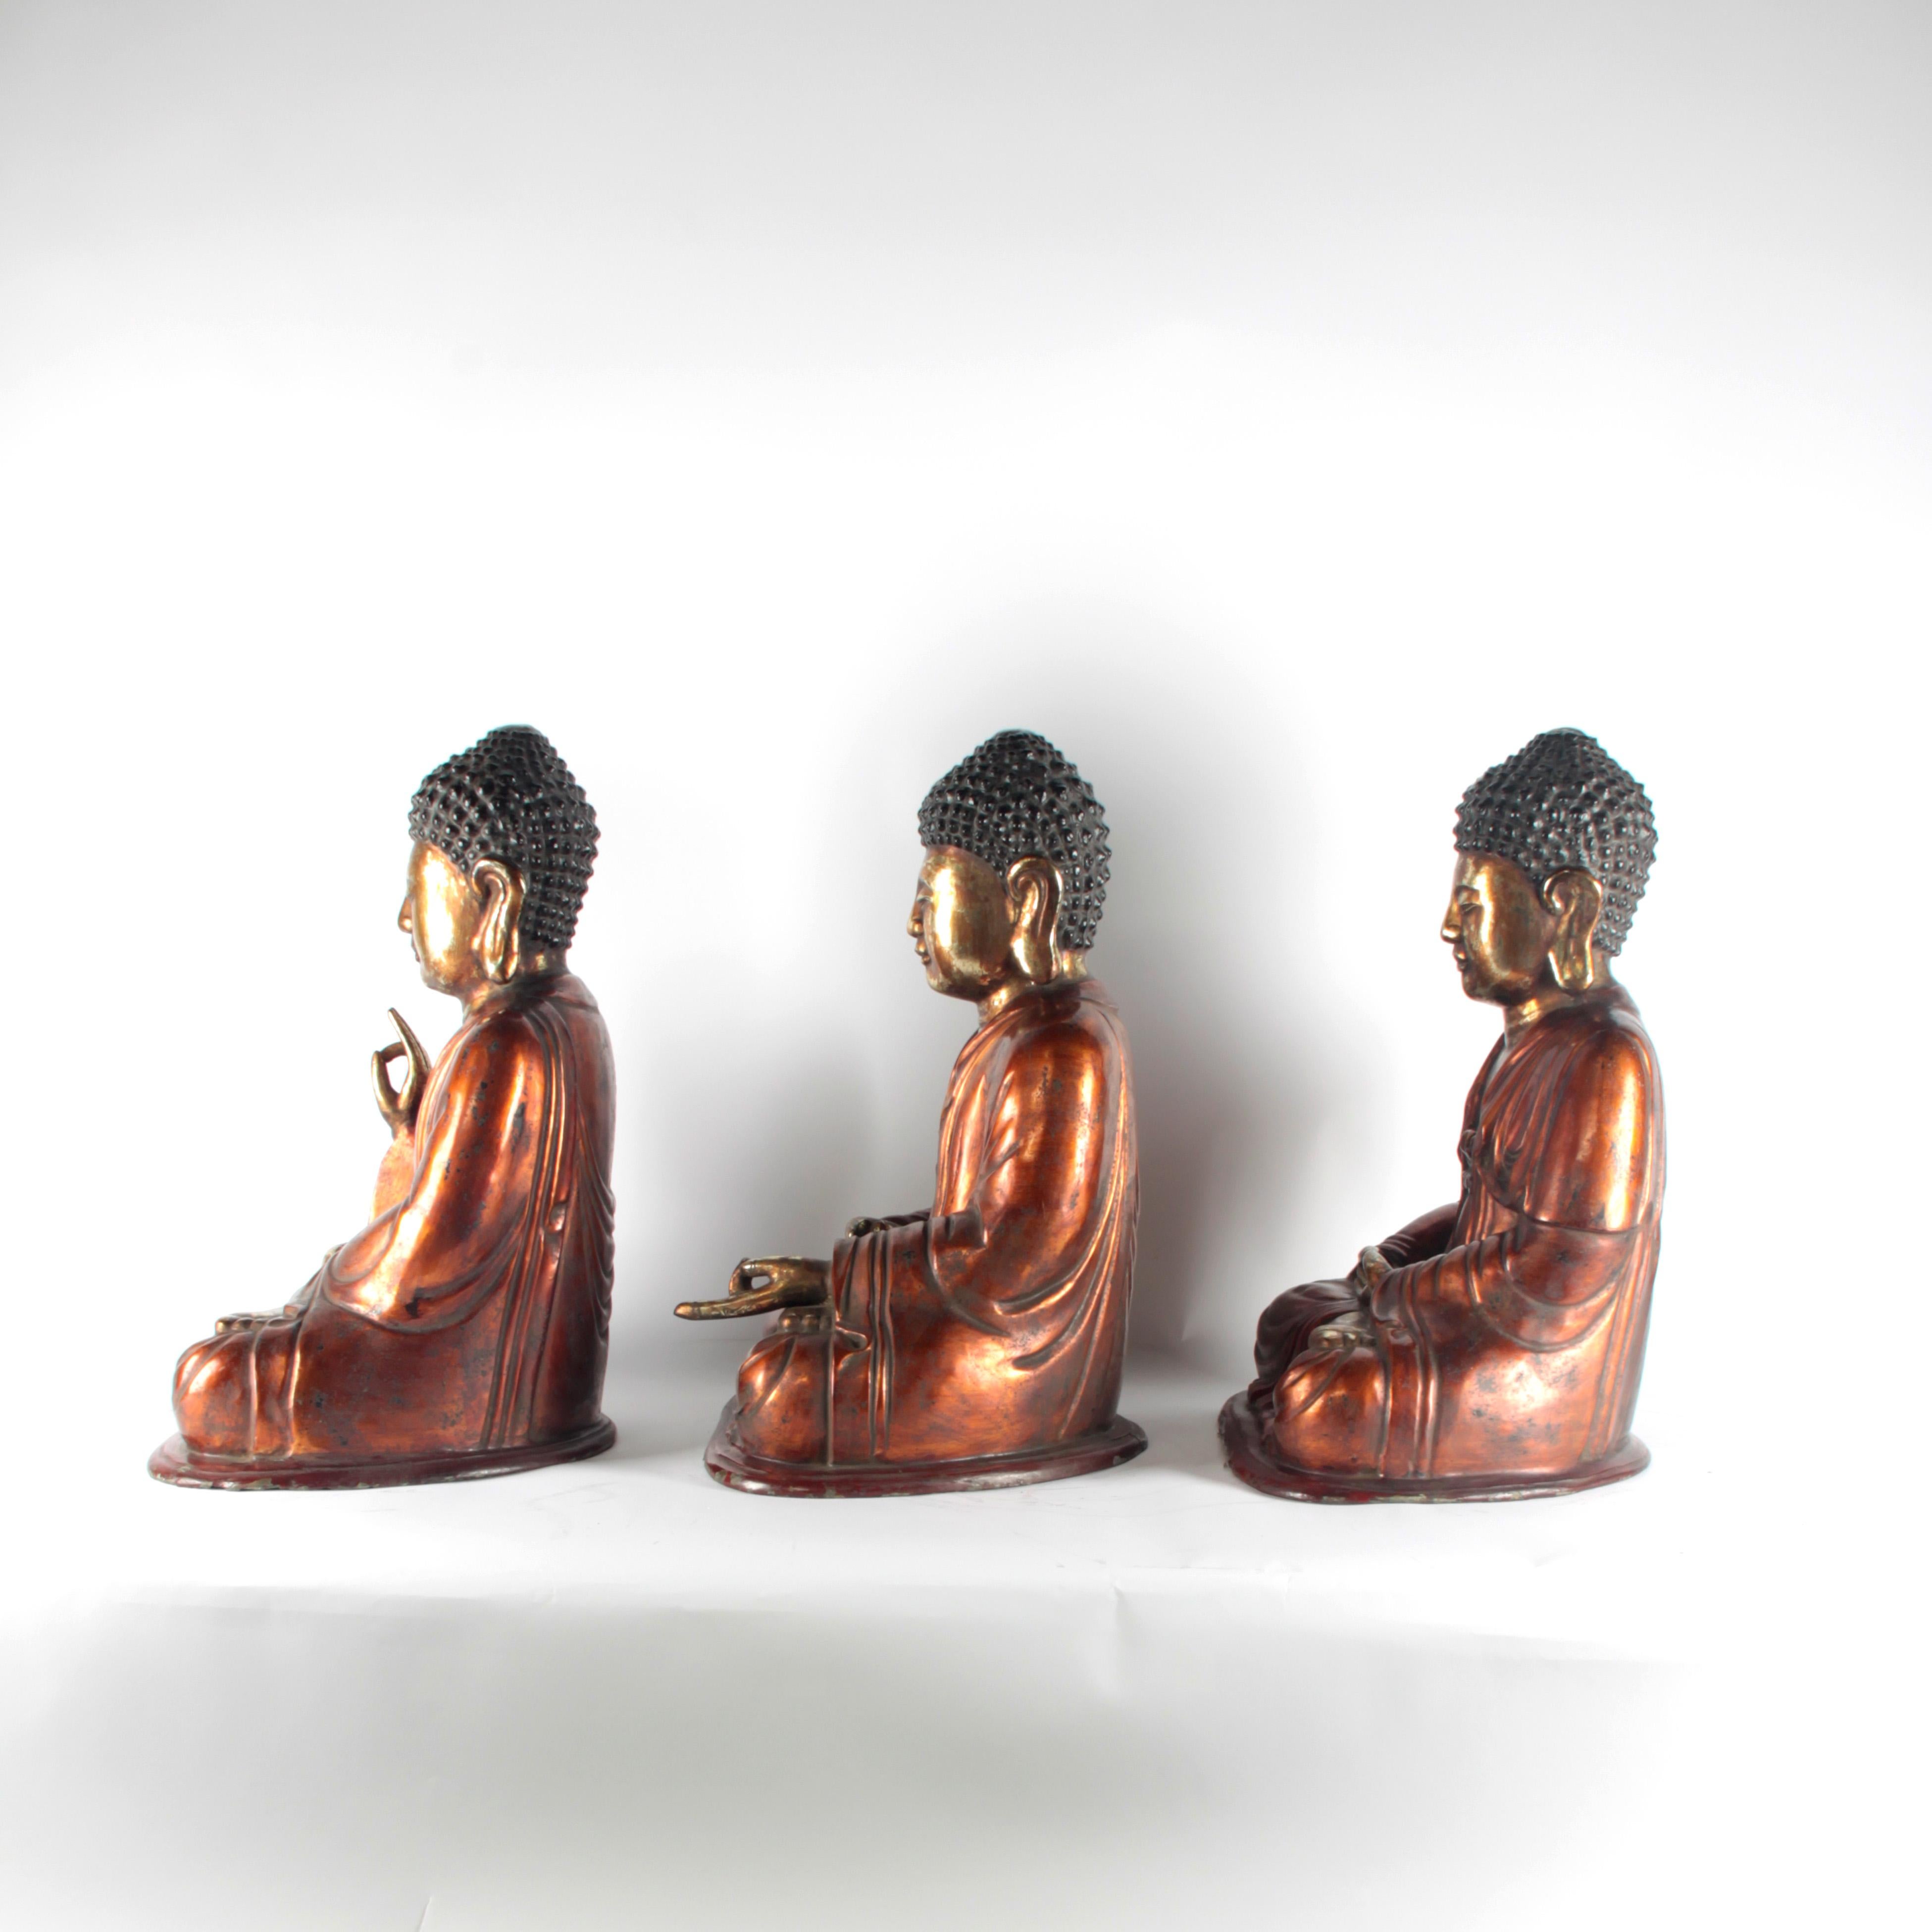 19th century bronze Asian Buddhas, Vietnam
Gold lacquer.
   